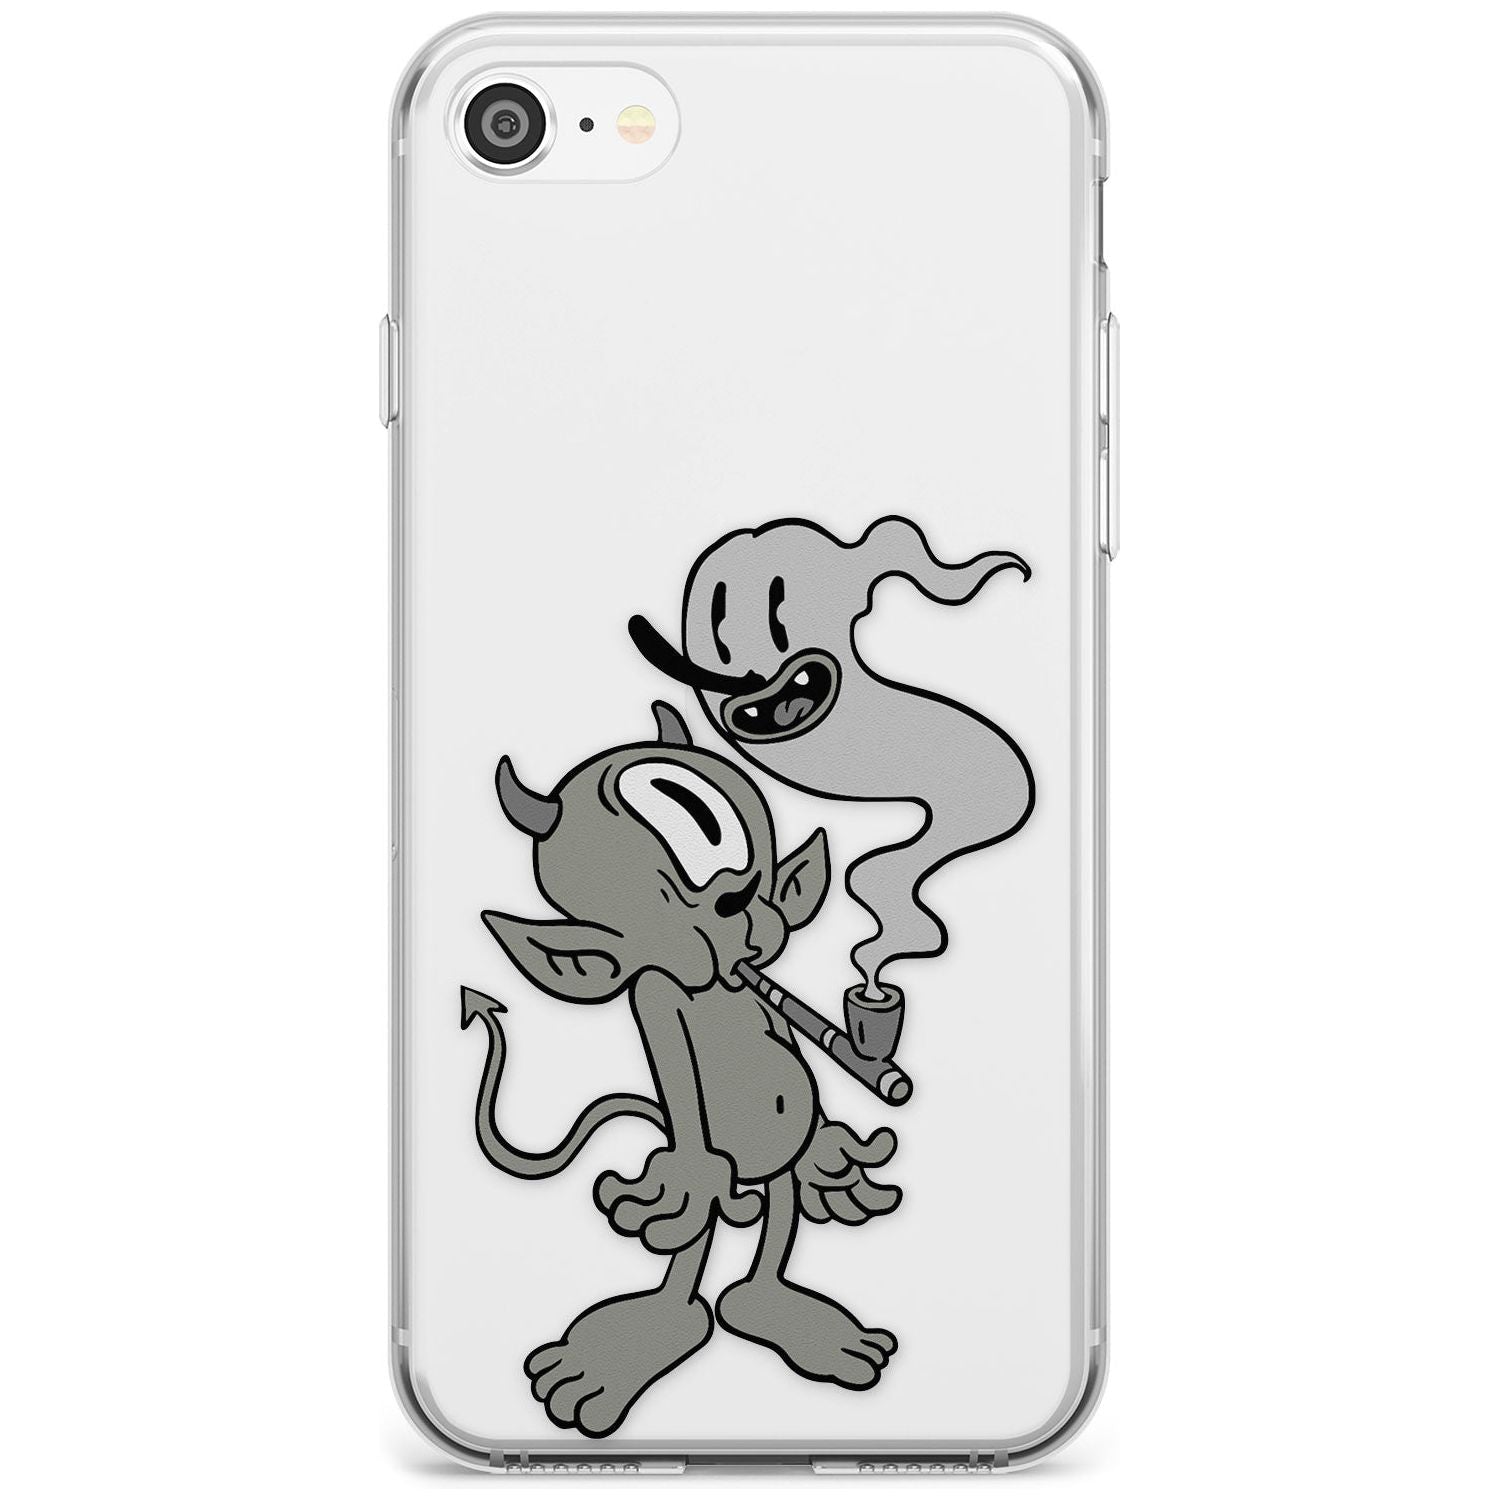 Pipe Goblin Slim TPU Phone Case for iPhone SE 8 7 Plus